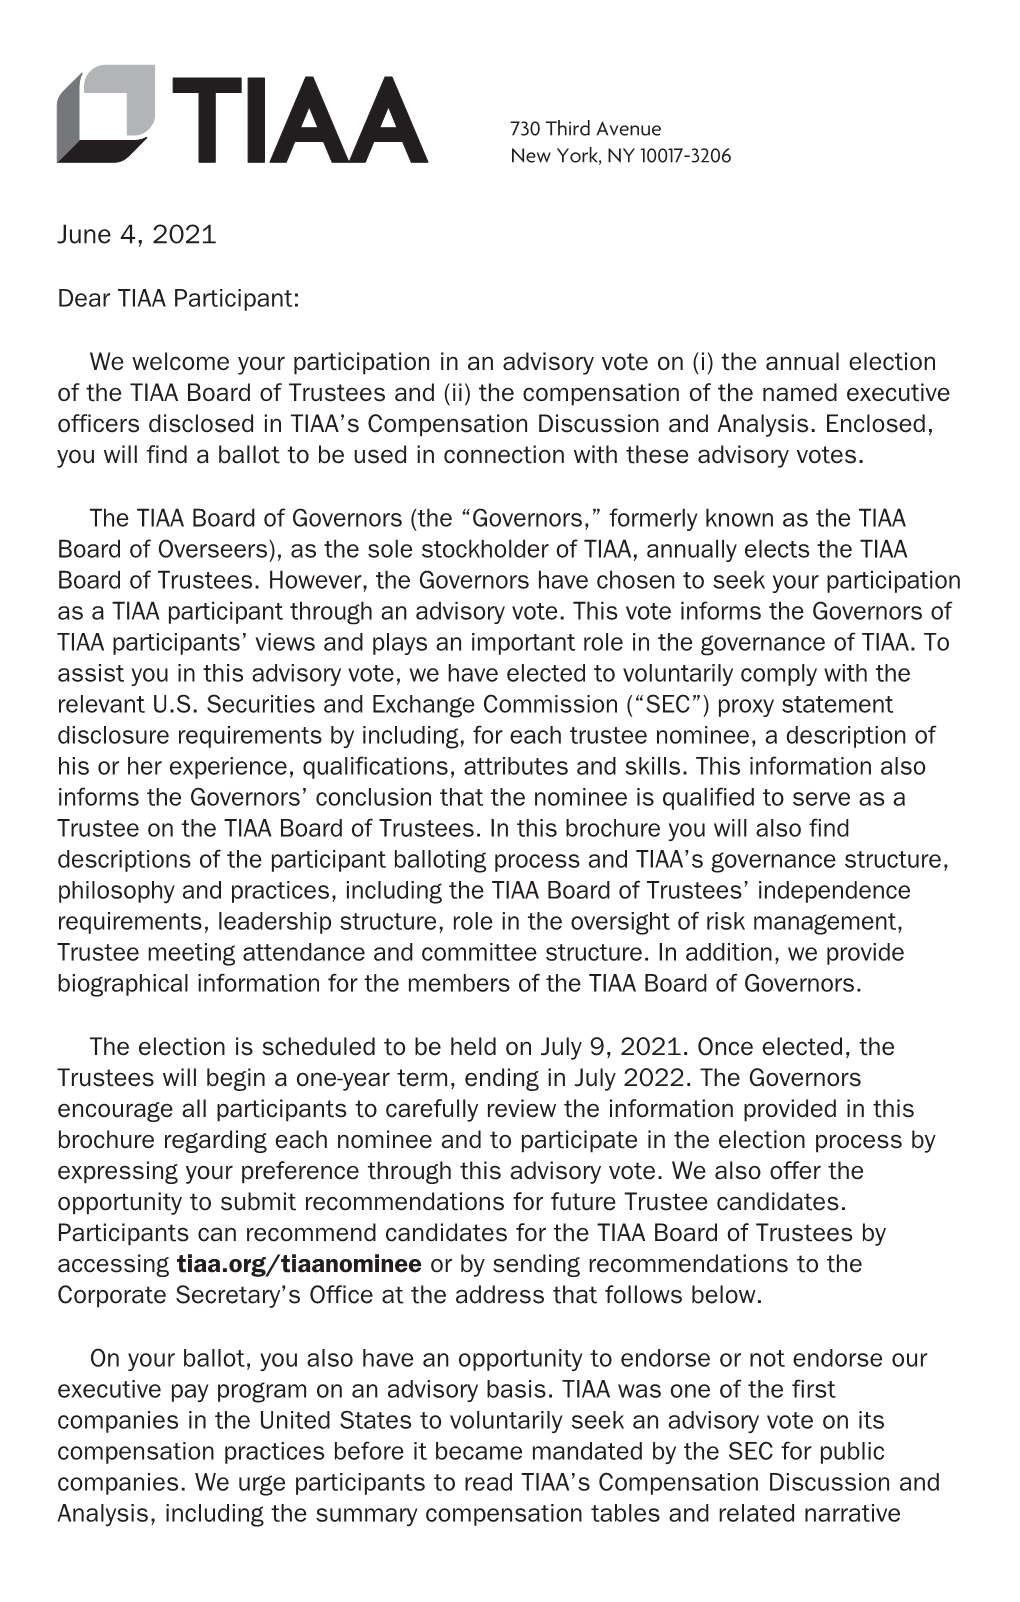 TIAA Advisory Vote Brochure 2021